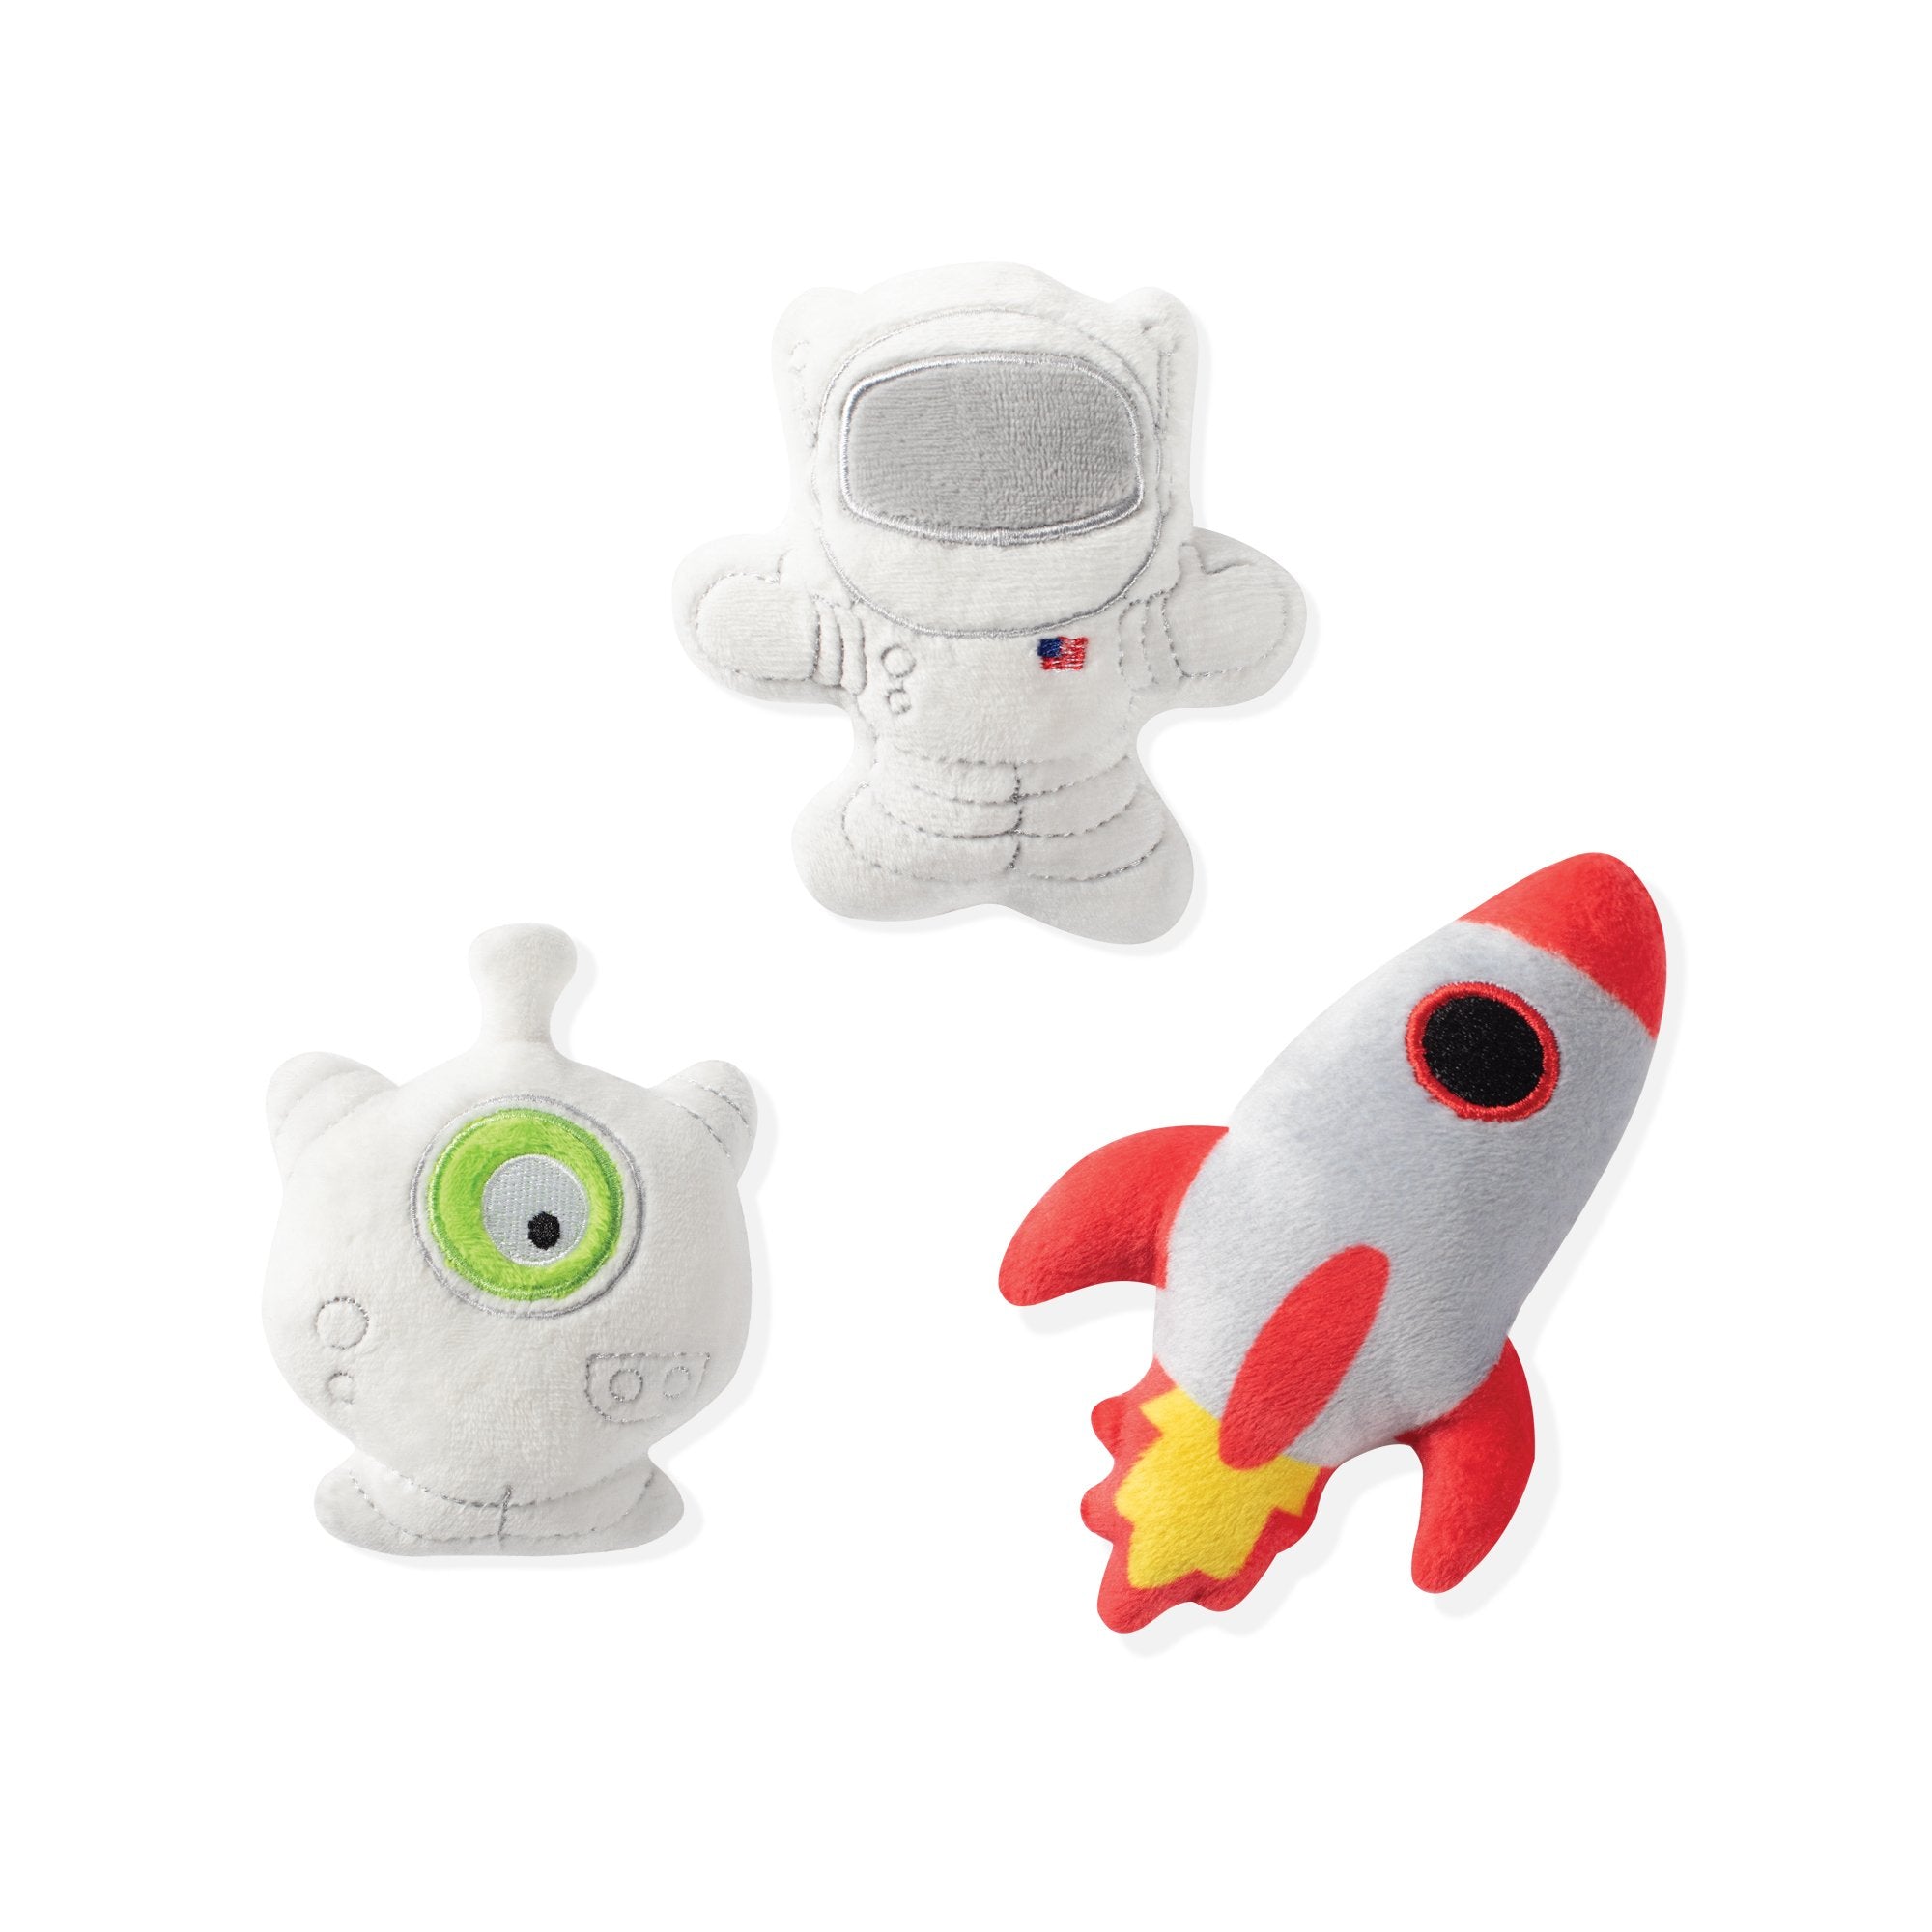 Space Mini Dog Toys (Set of 3)